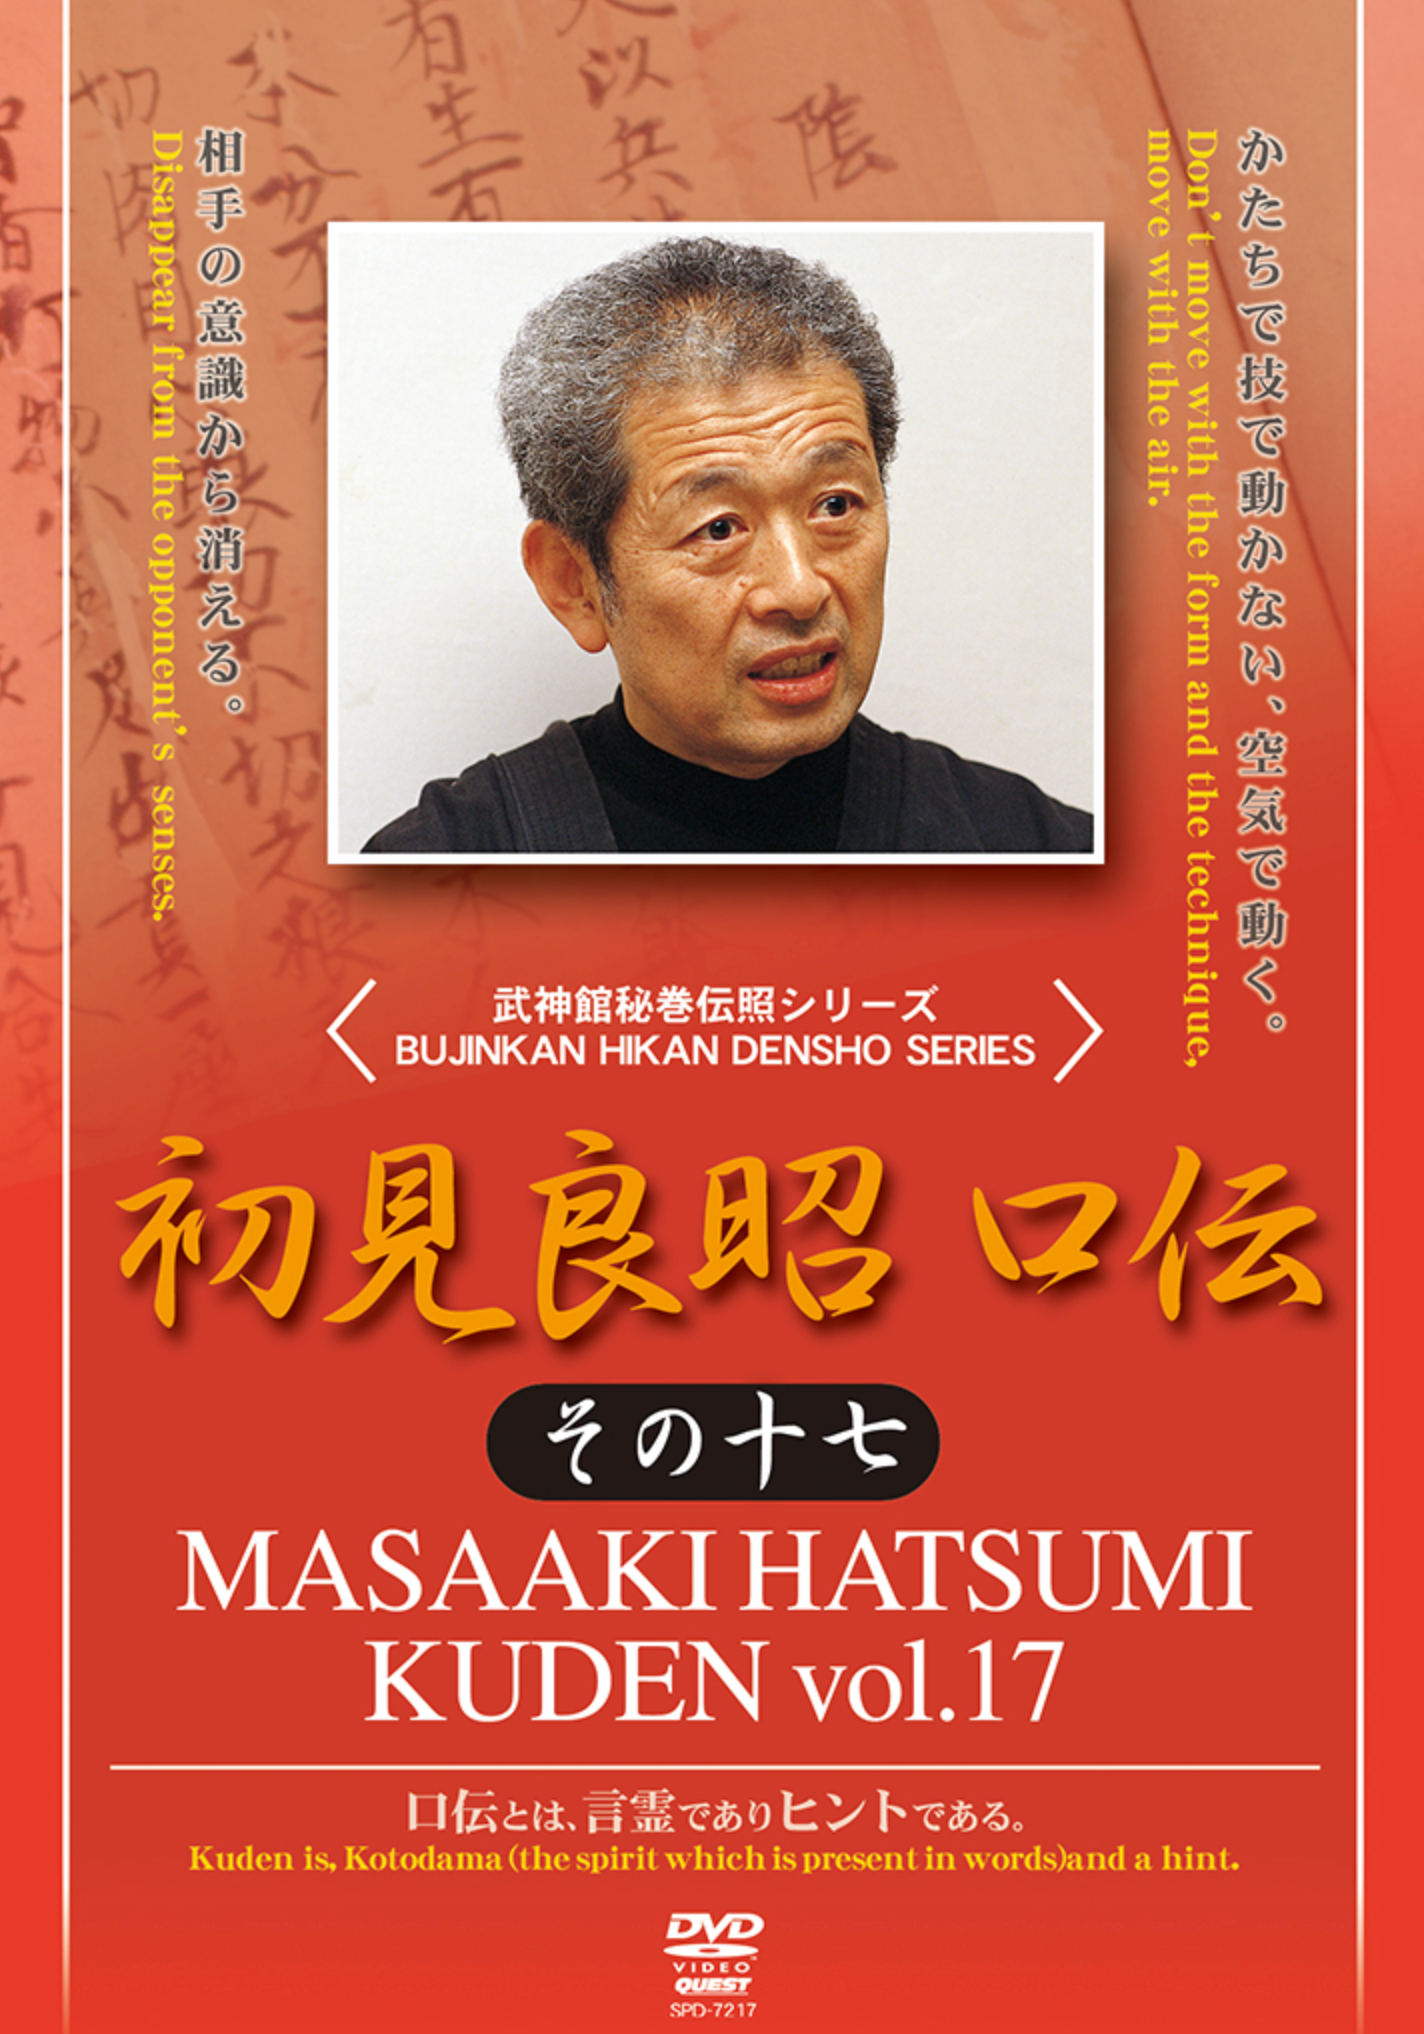 Kuden Vol 17 DVD with Masaaki Hatsumi - Budovideos Inc